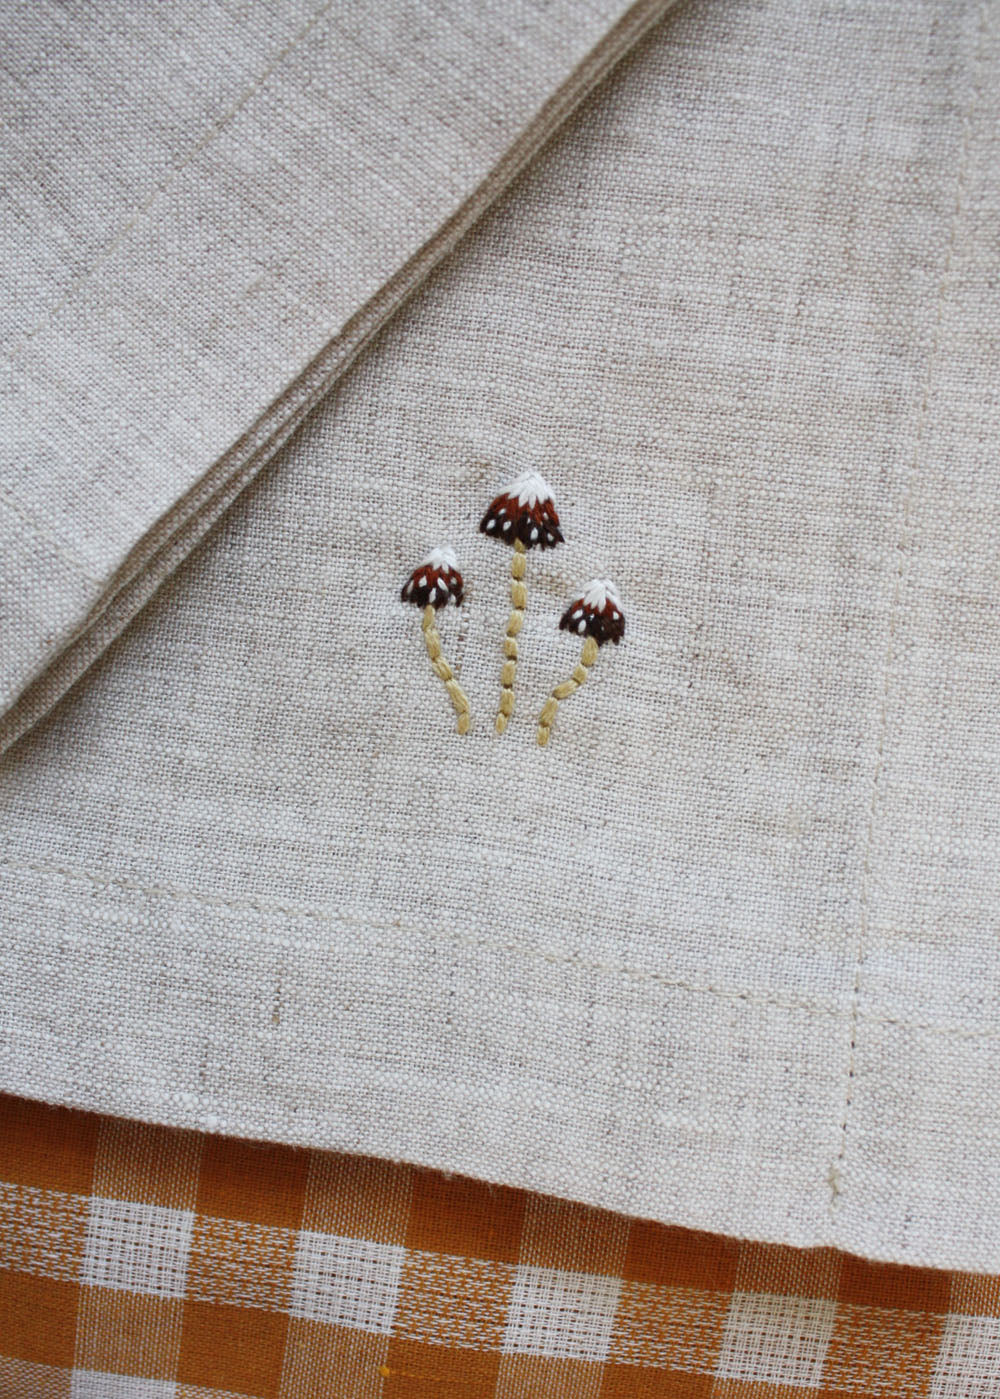 Magical mushrooms linen napkin set of 4